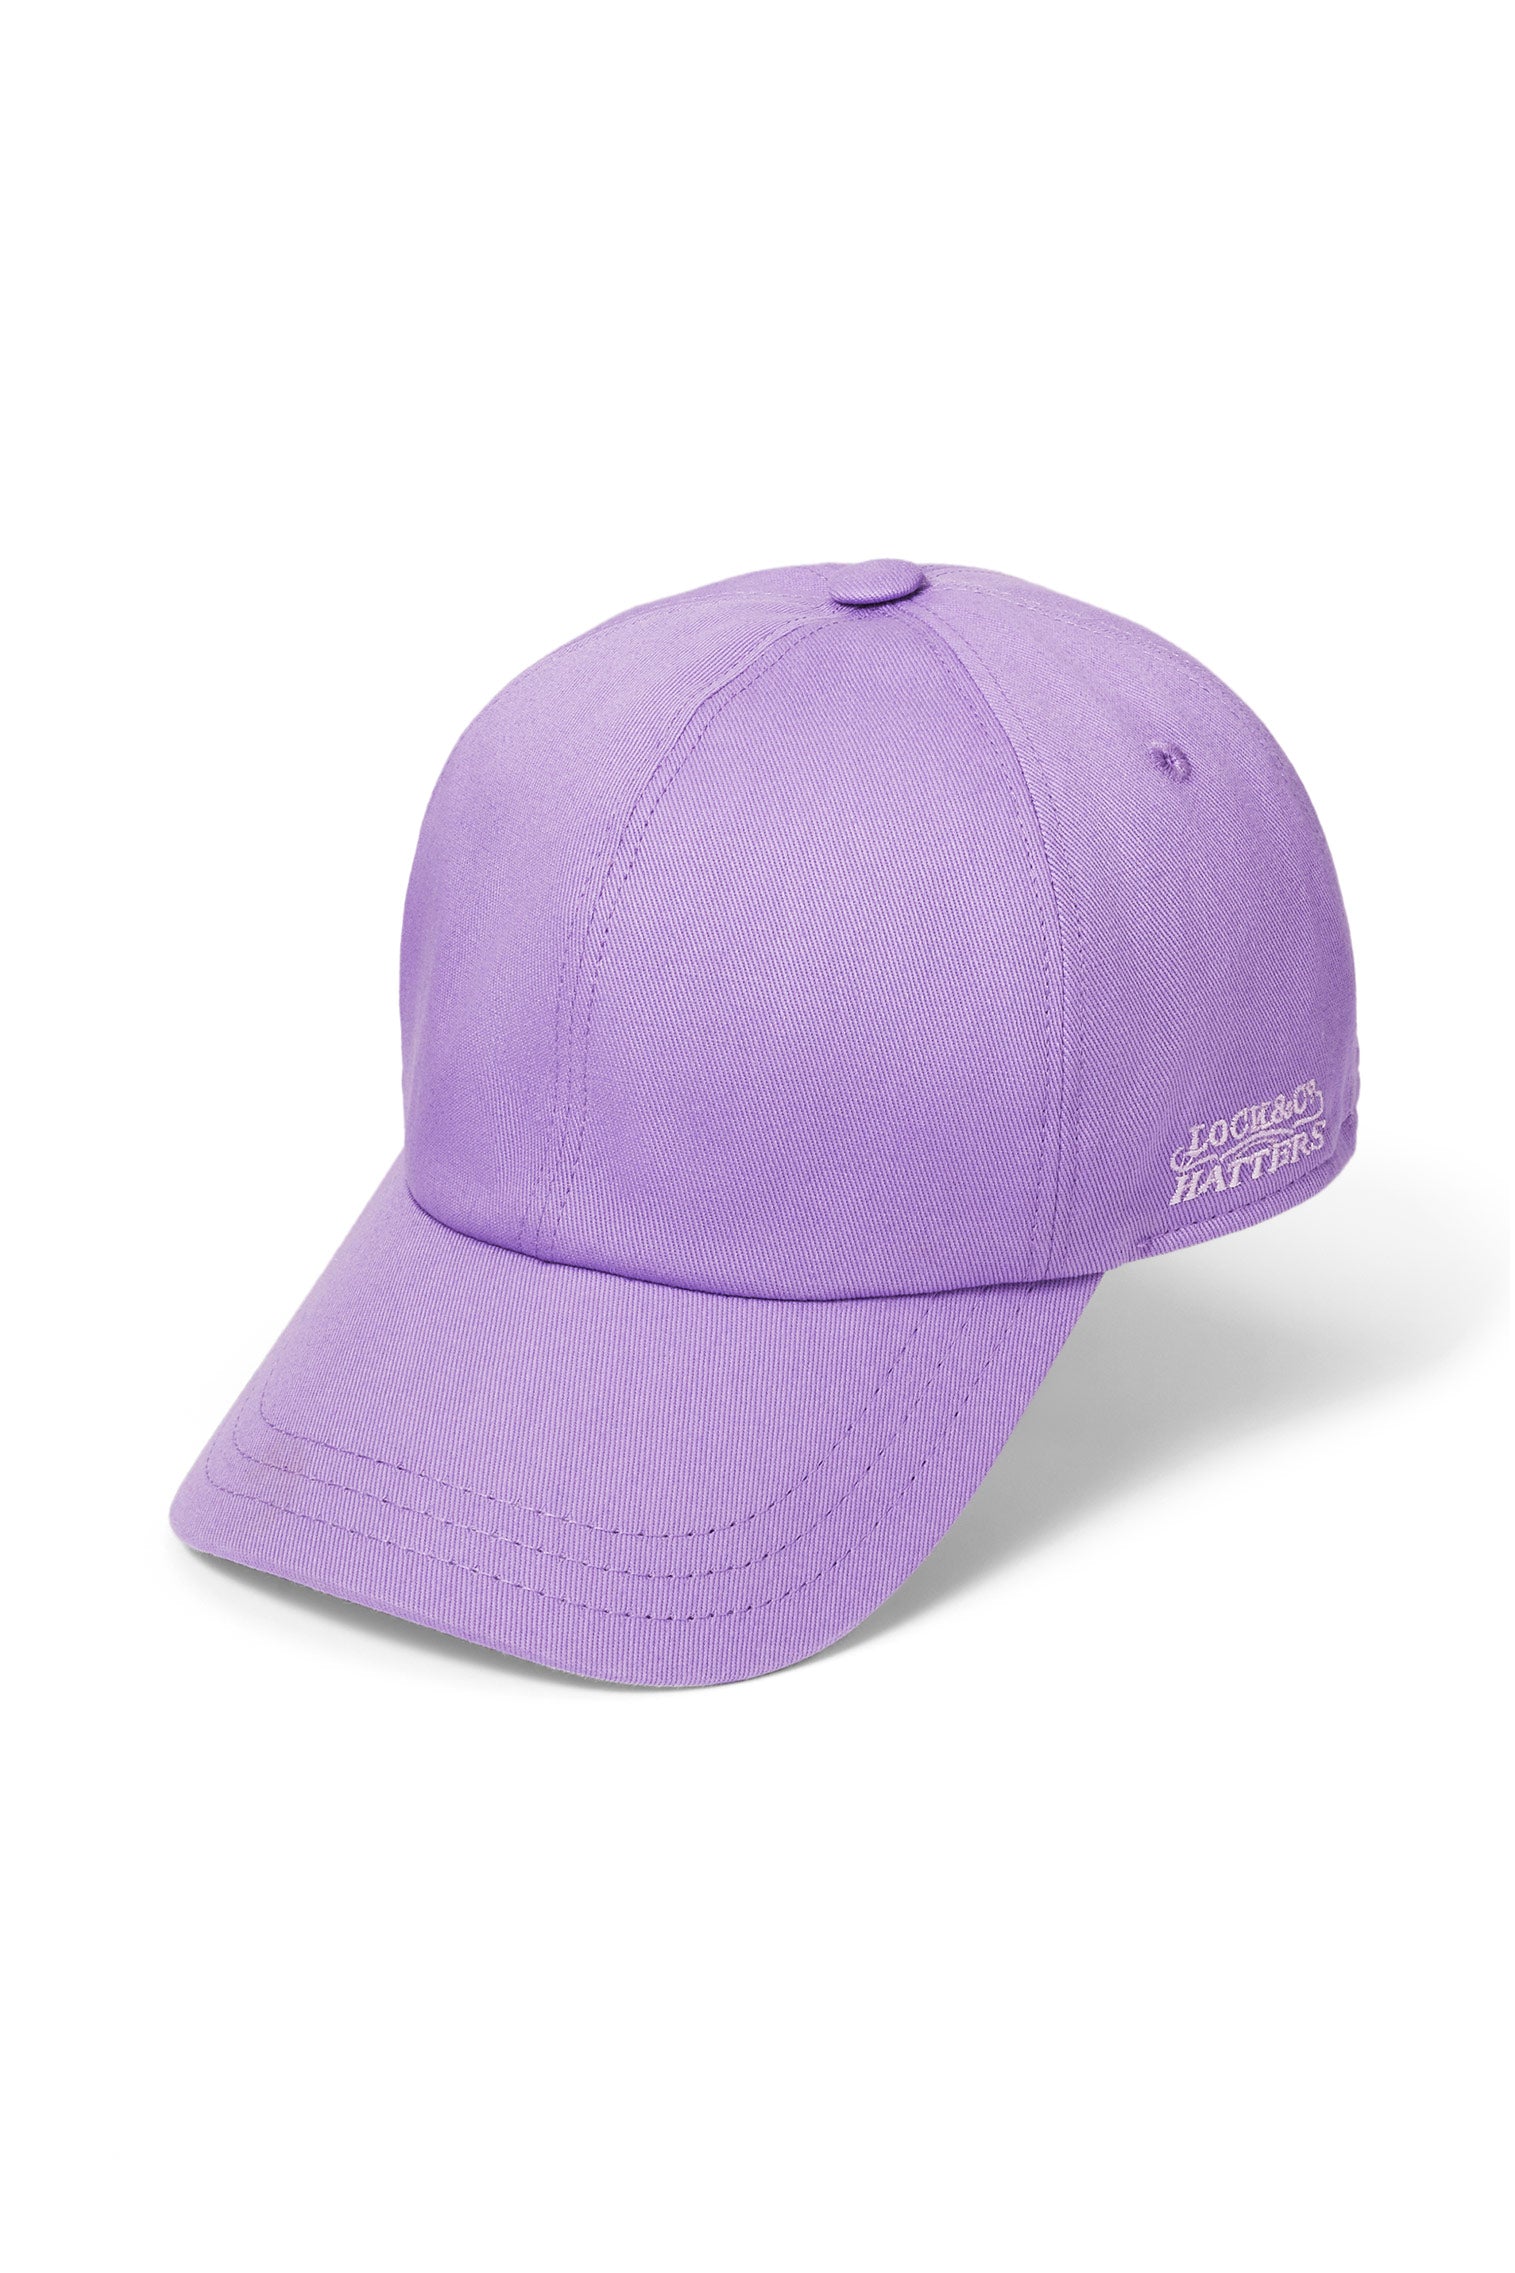 Adjustable Purple Baseball Cap - Products - Lock & Co. Hatters London UK